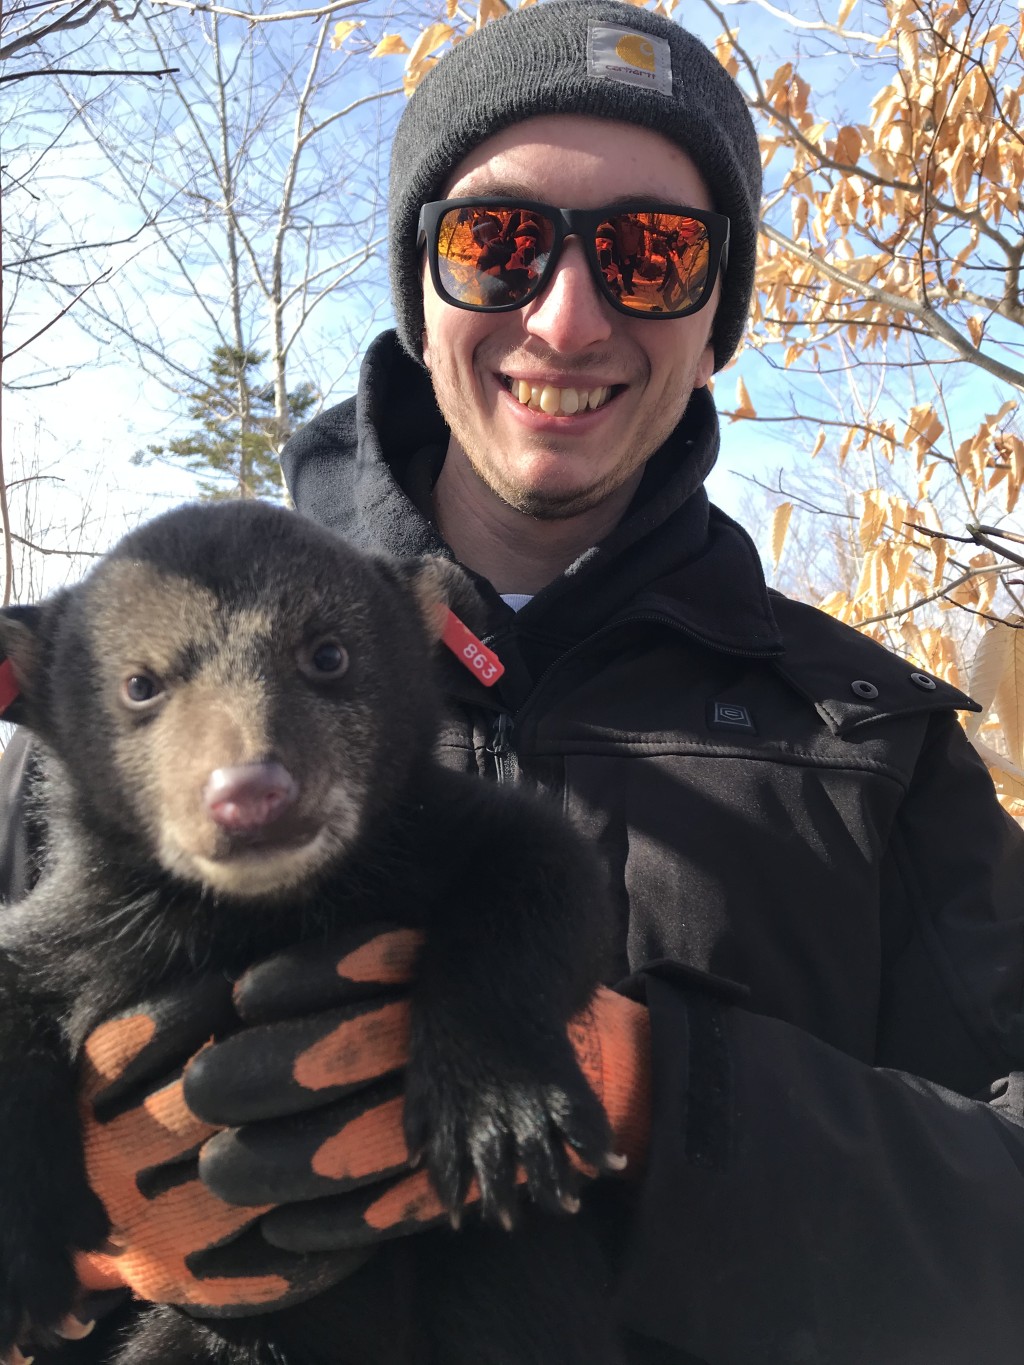 Student Ethan Maskiell holds a six-week old bear cub